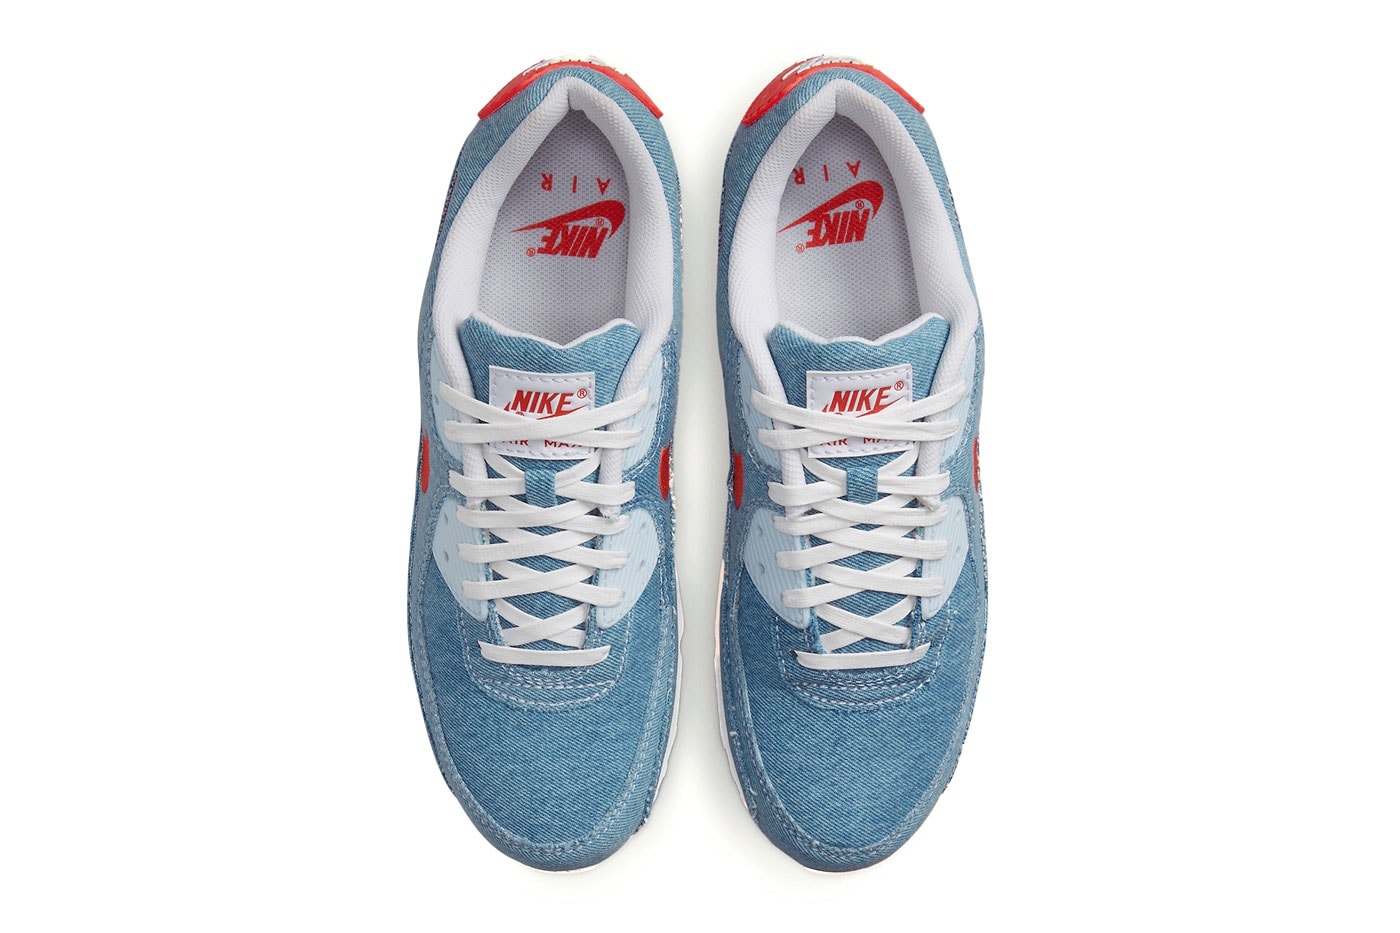 Nike Air Max 90 denim 501 lightwash blue red white release info date price 